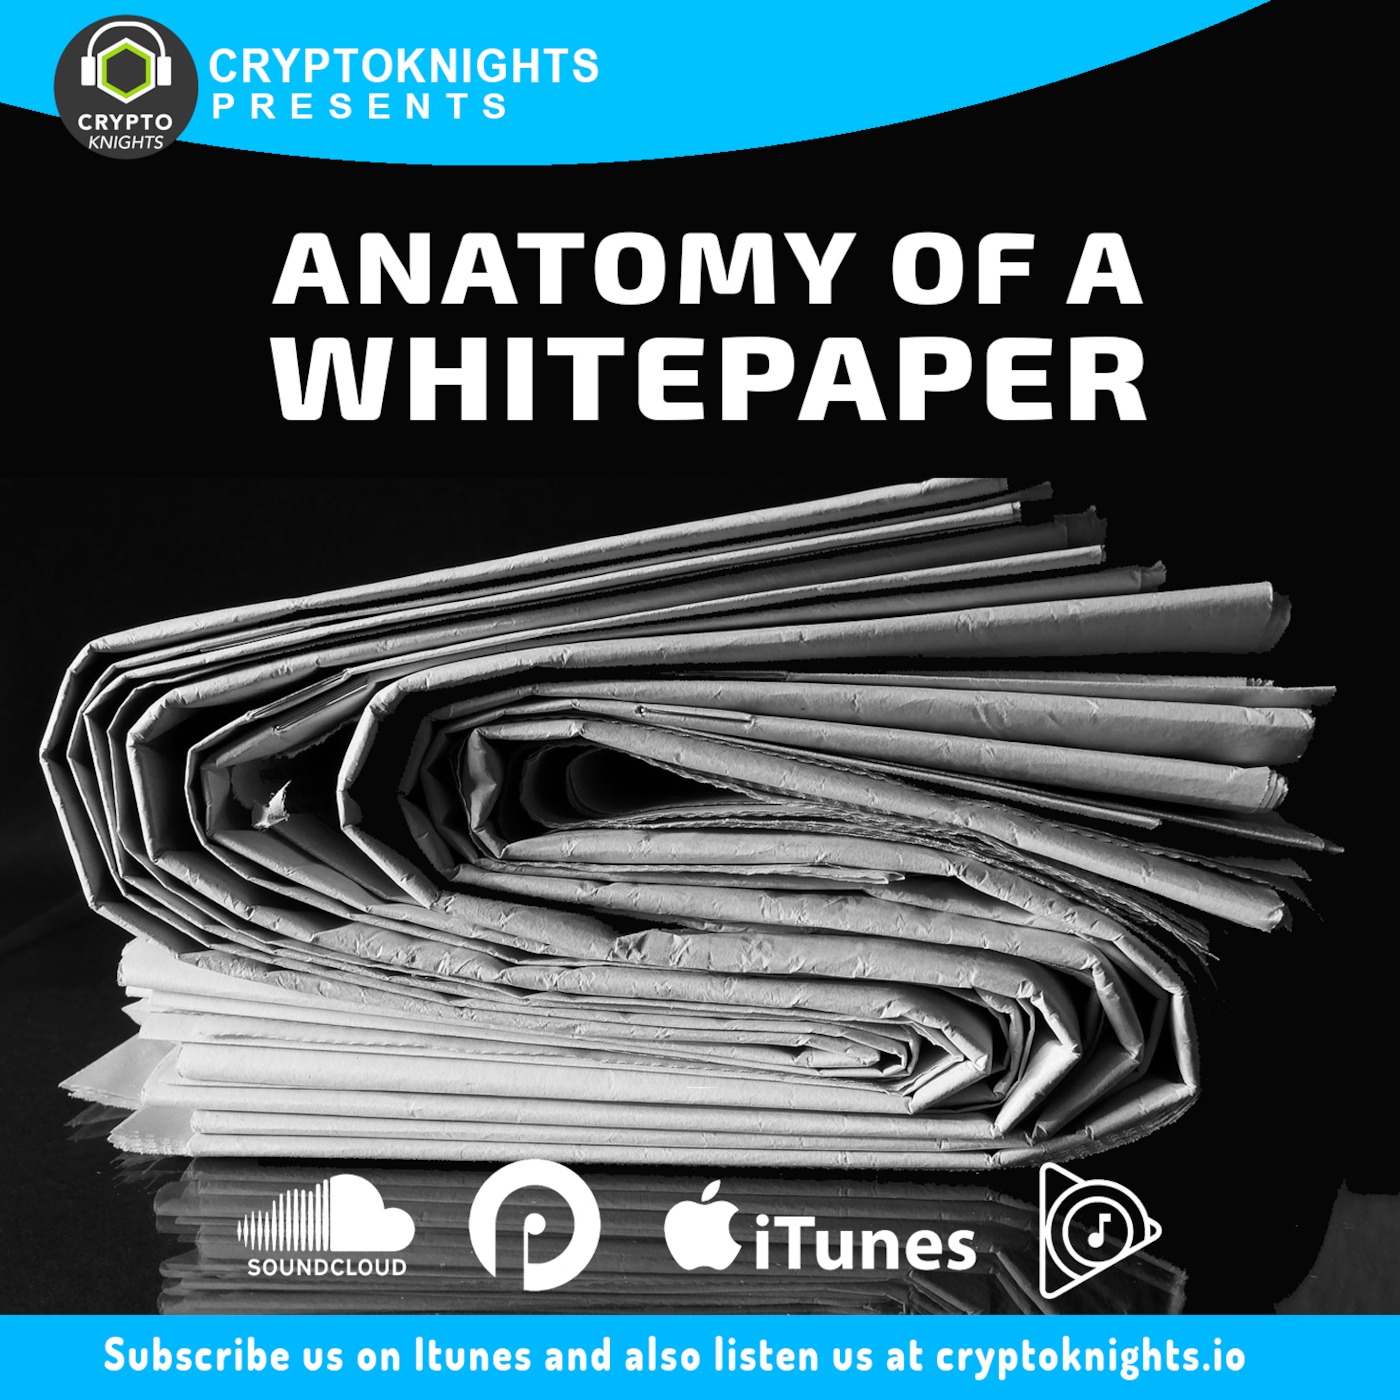 Anatomy of an Whitepaper